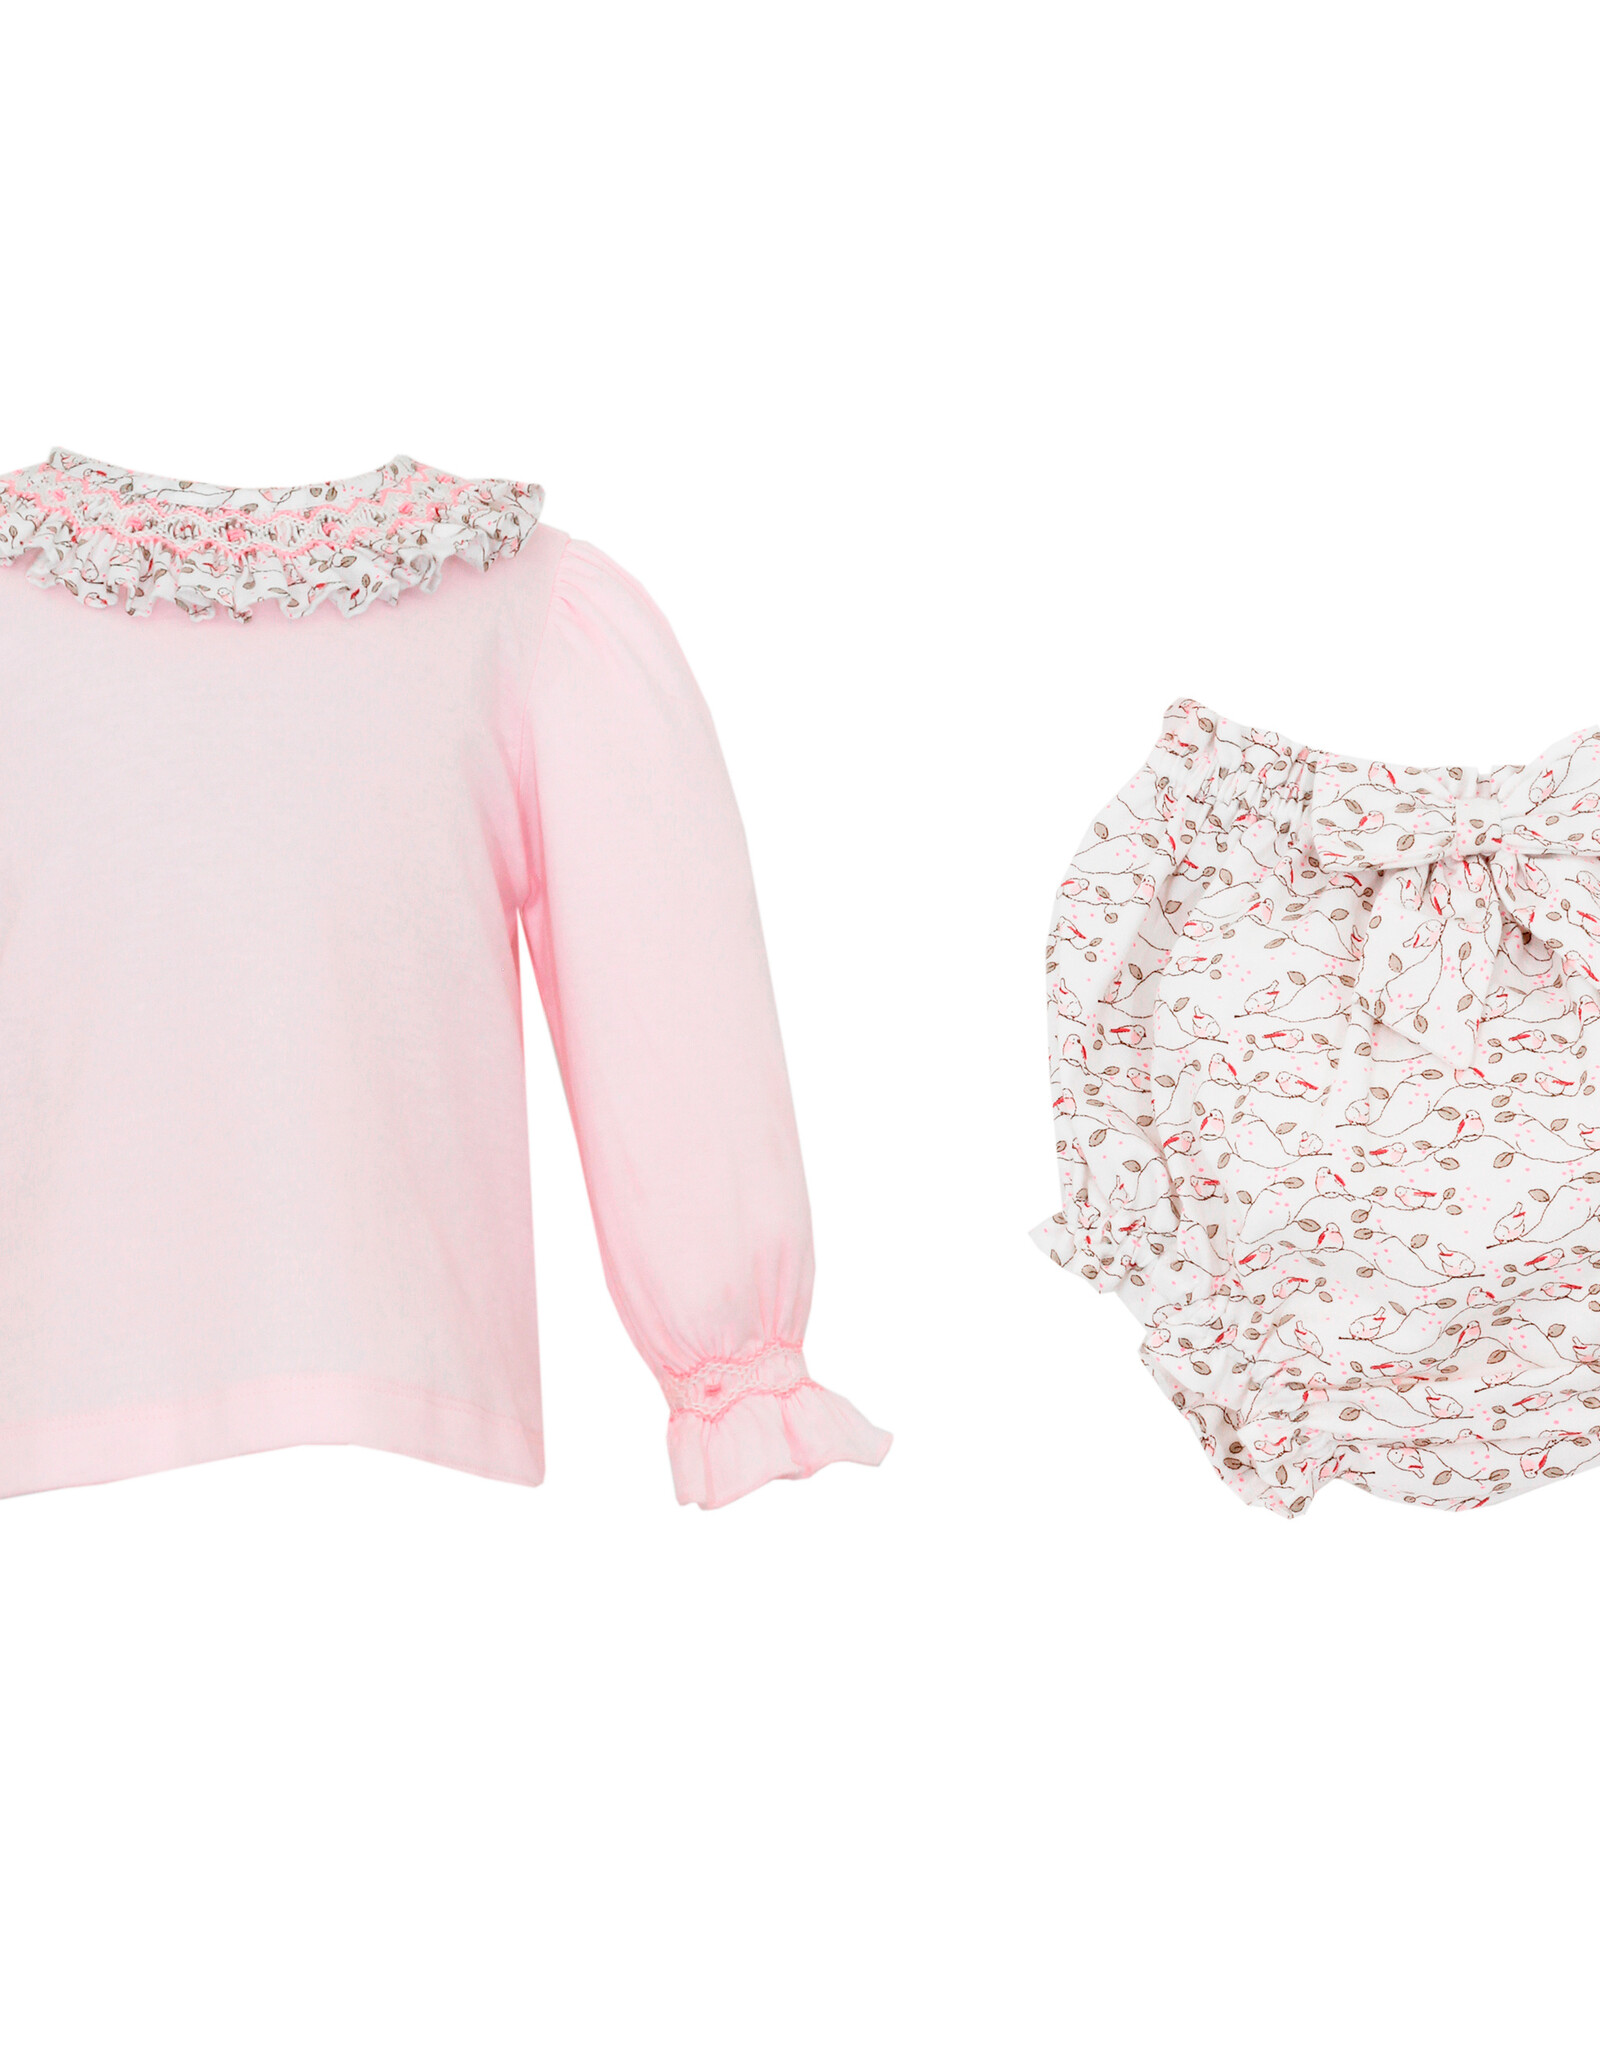 Petit Bebe Pink Knit Top W/ Smocked collar - L/S